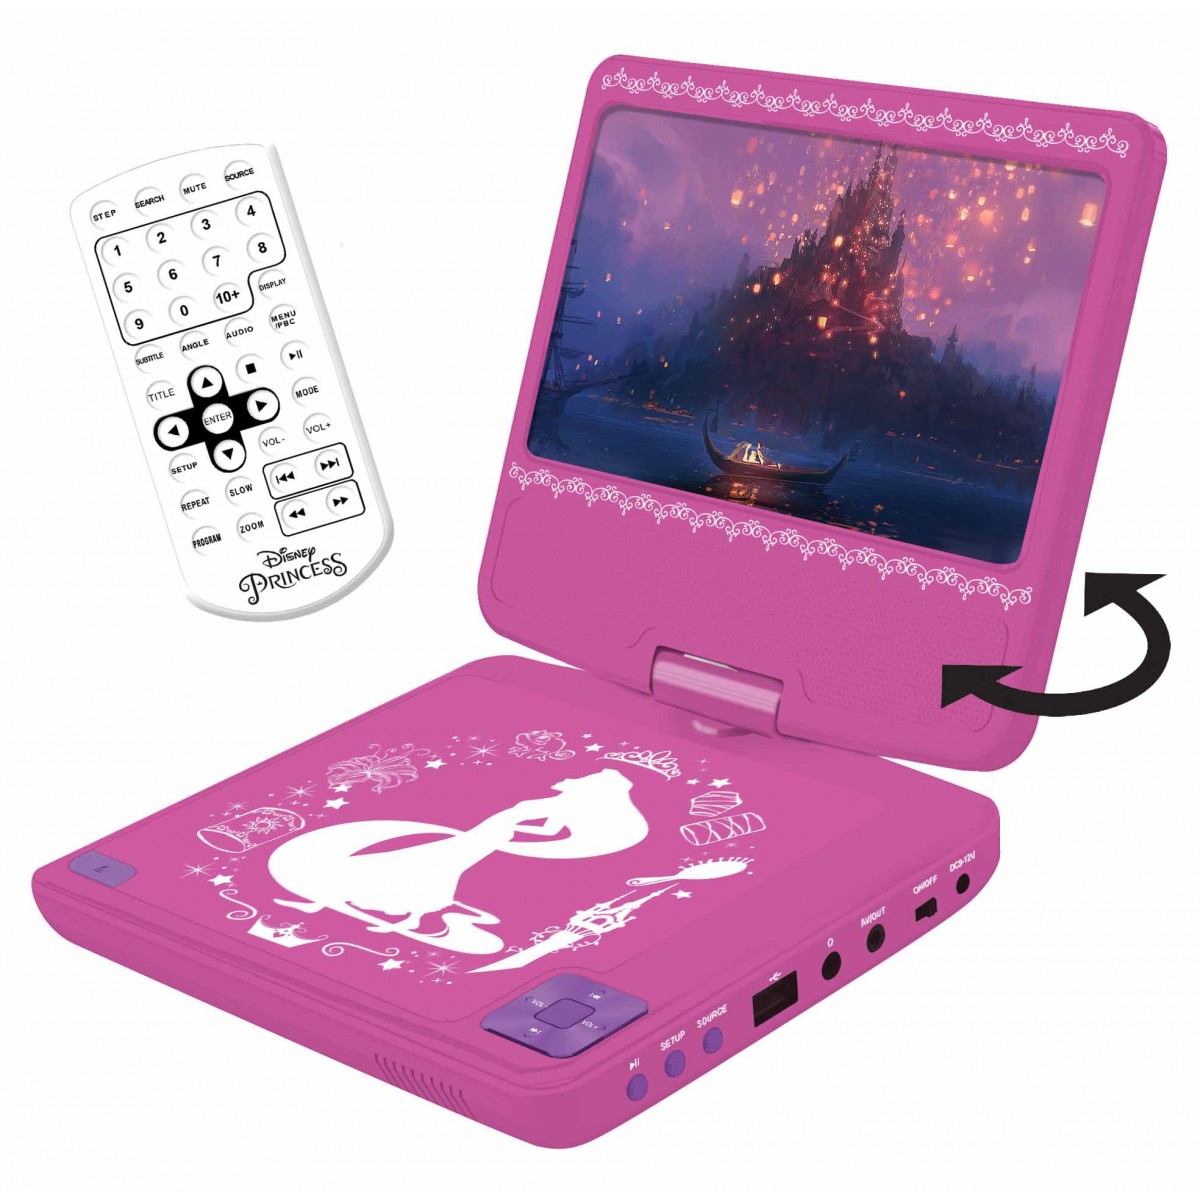 Portable DVD player Princess